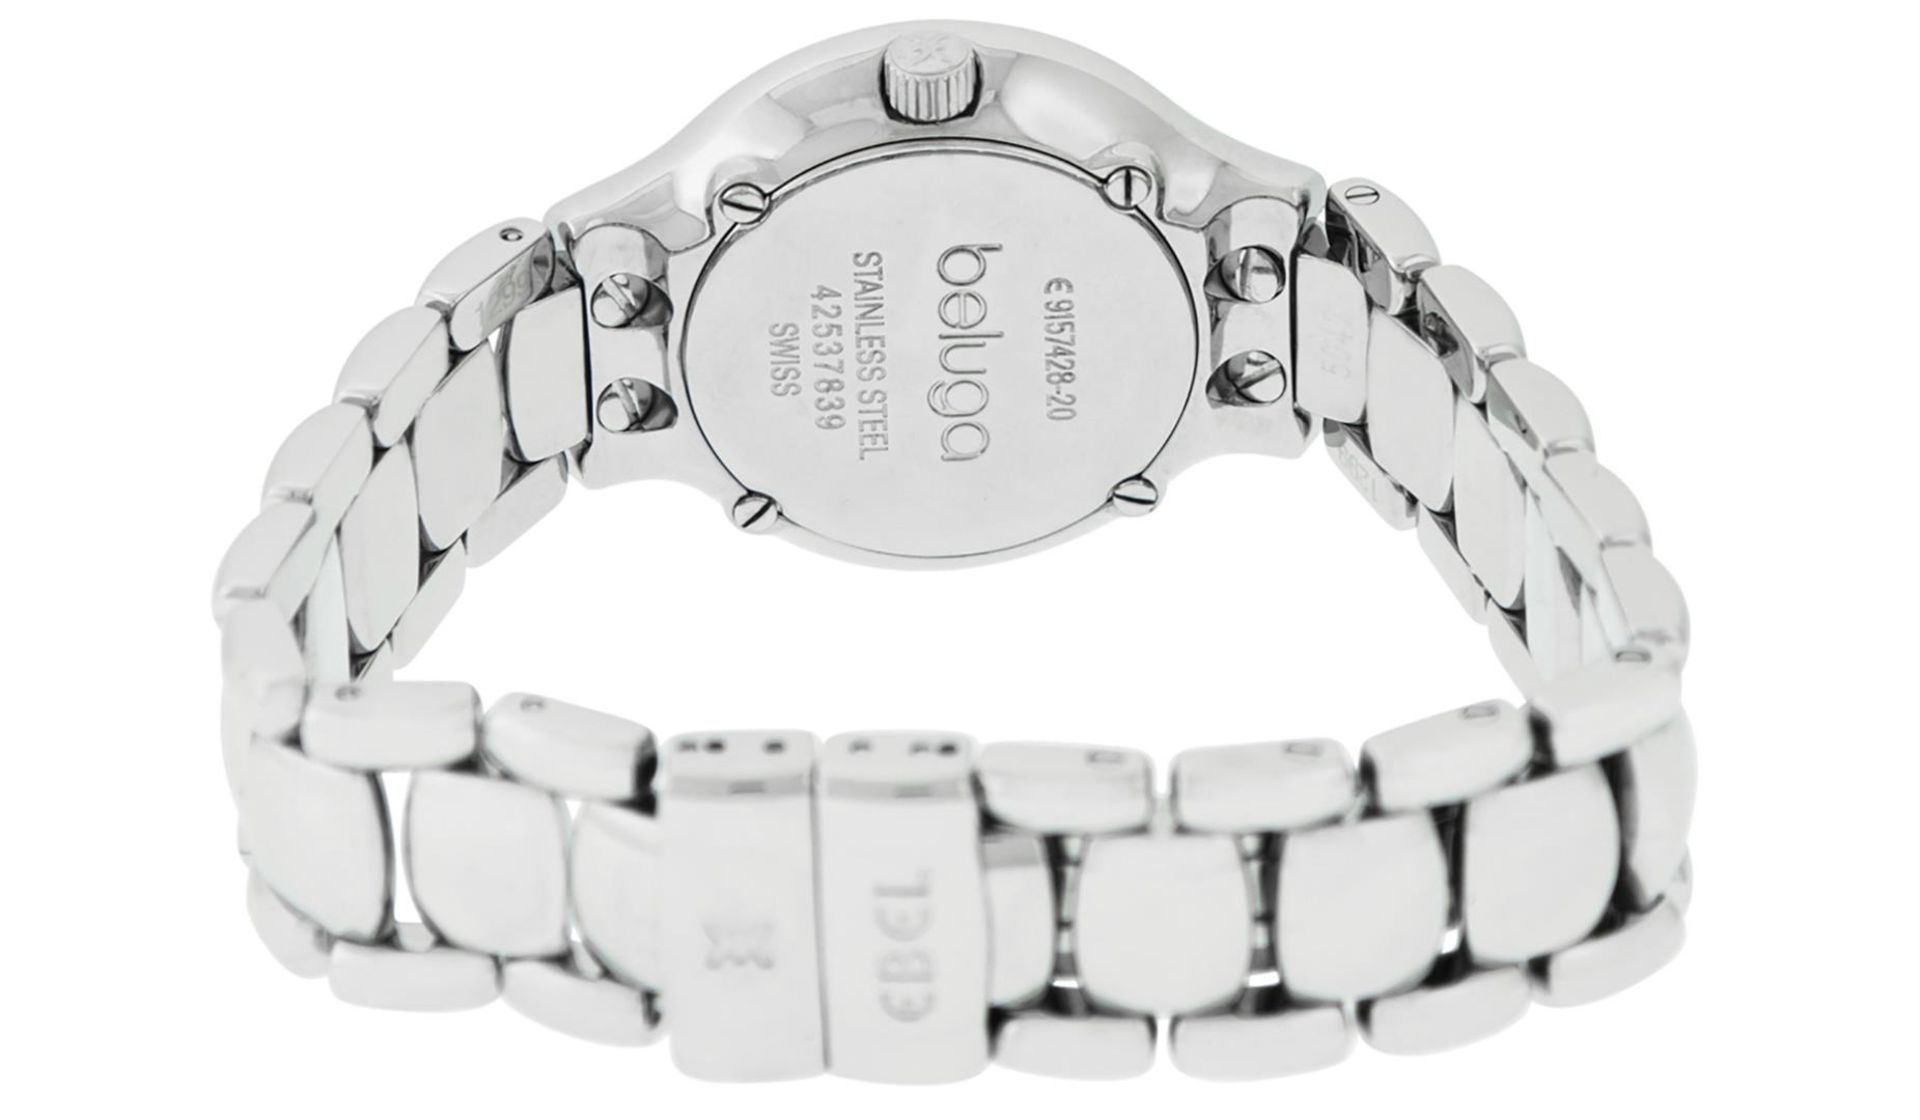 Ebel Beluga Ladies Stainless Steel MOP Diamond Watch 27mm Wristwatch - Image 8 of 18